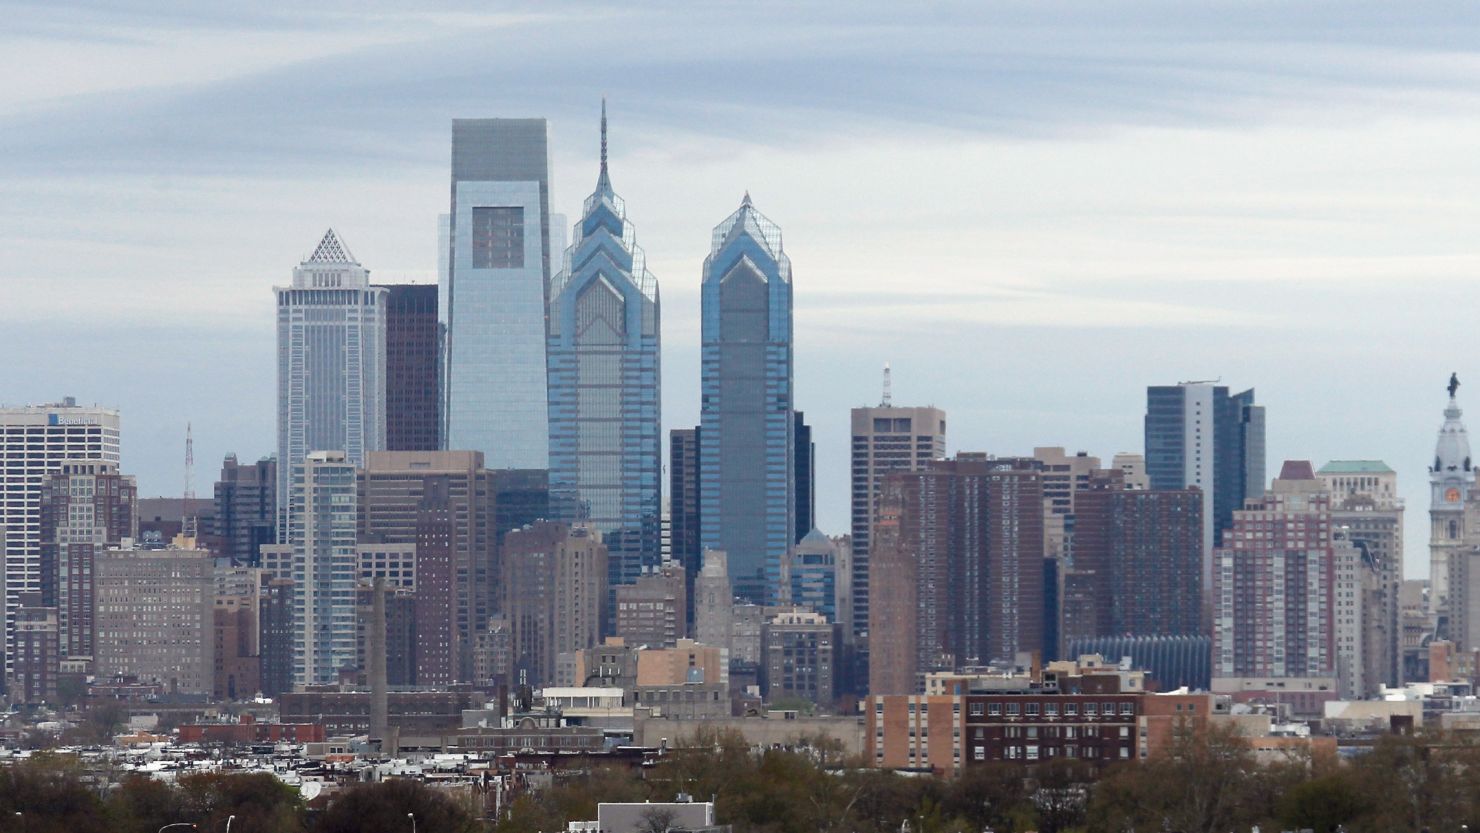 A general view of the Philadelphia city skyline